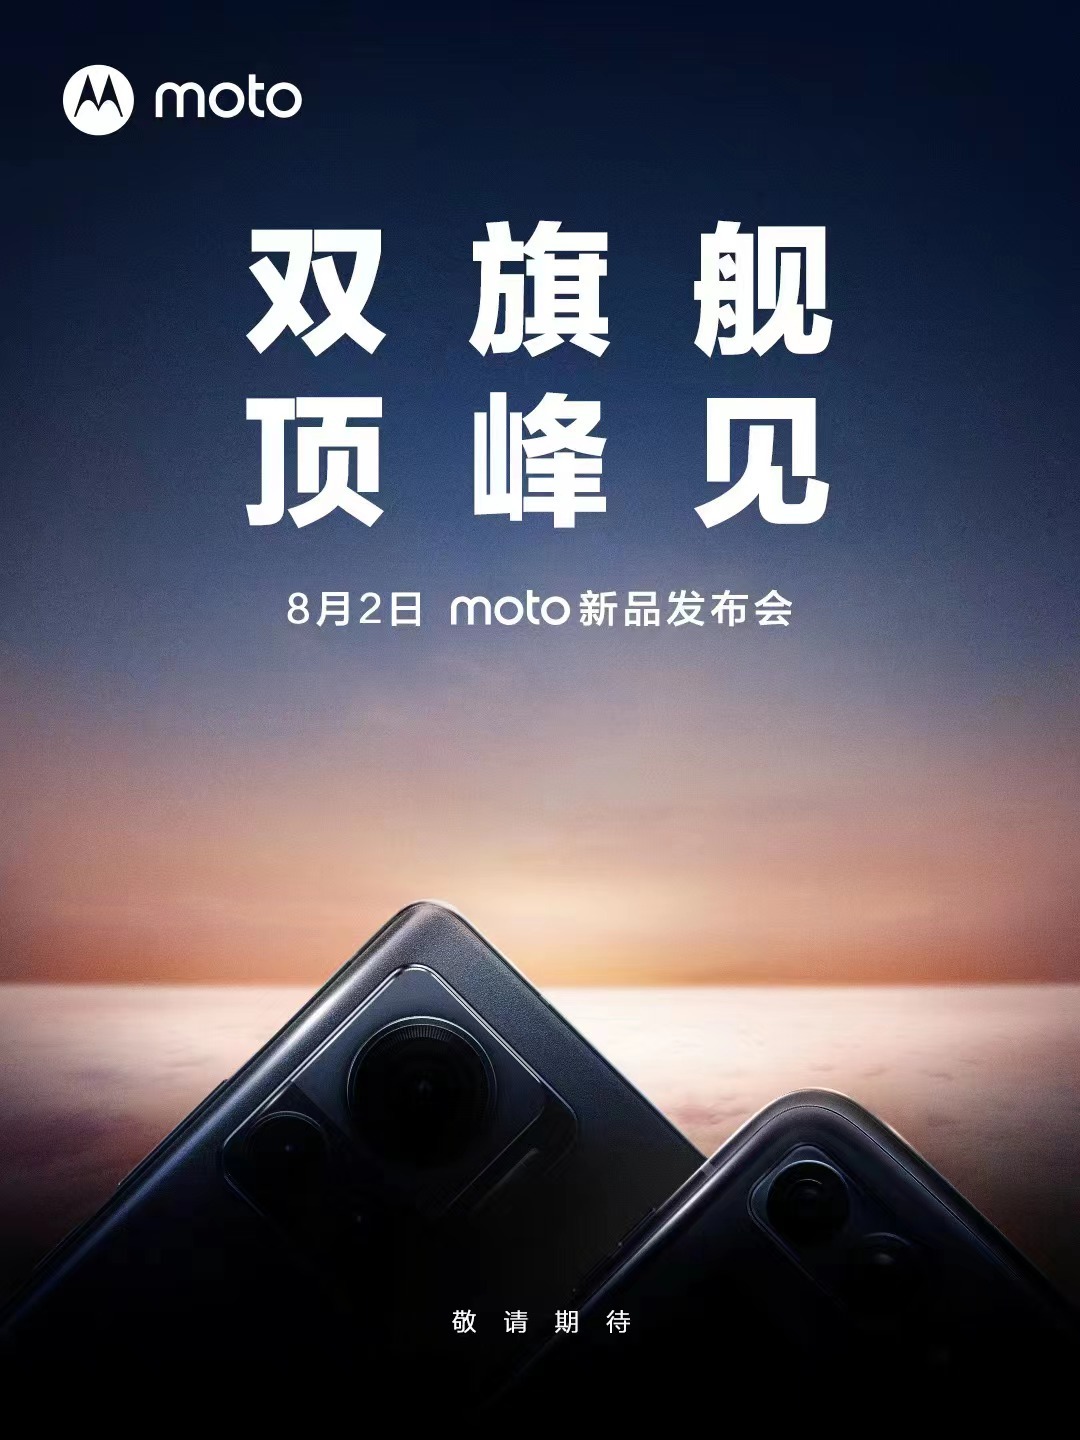 Moto X30 Pro, Razr 2022 launch date